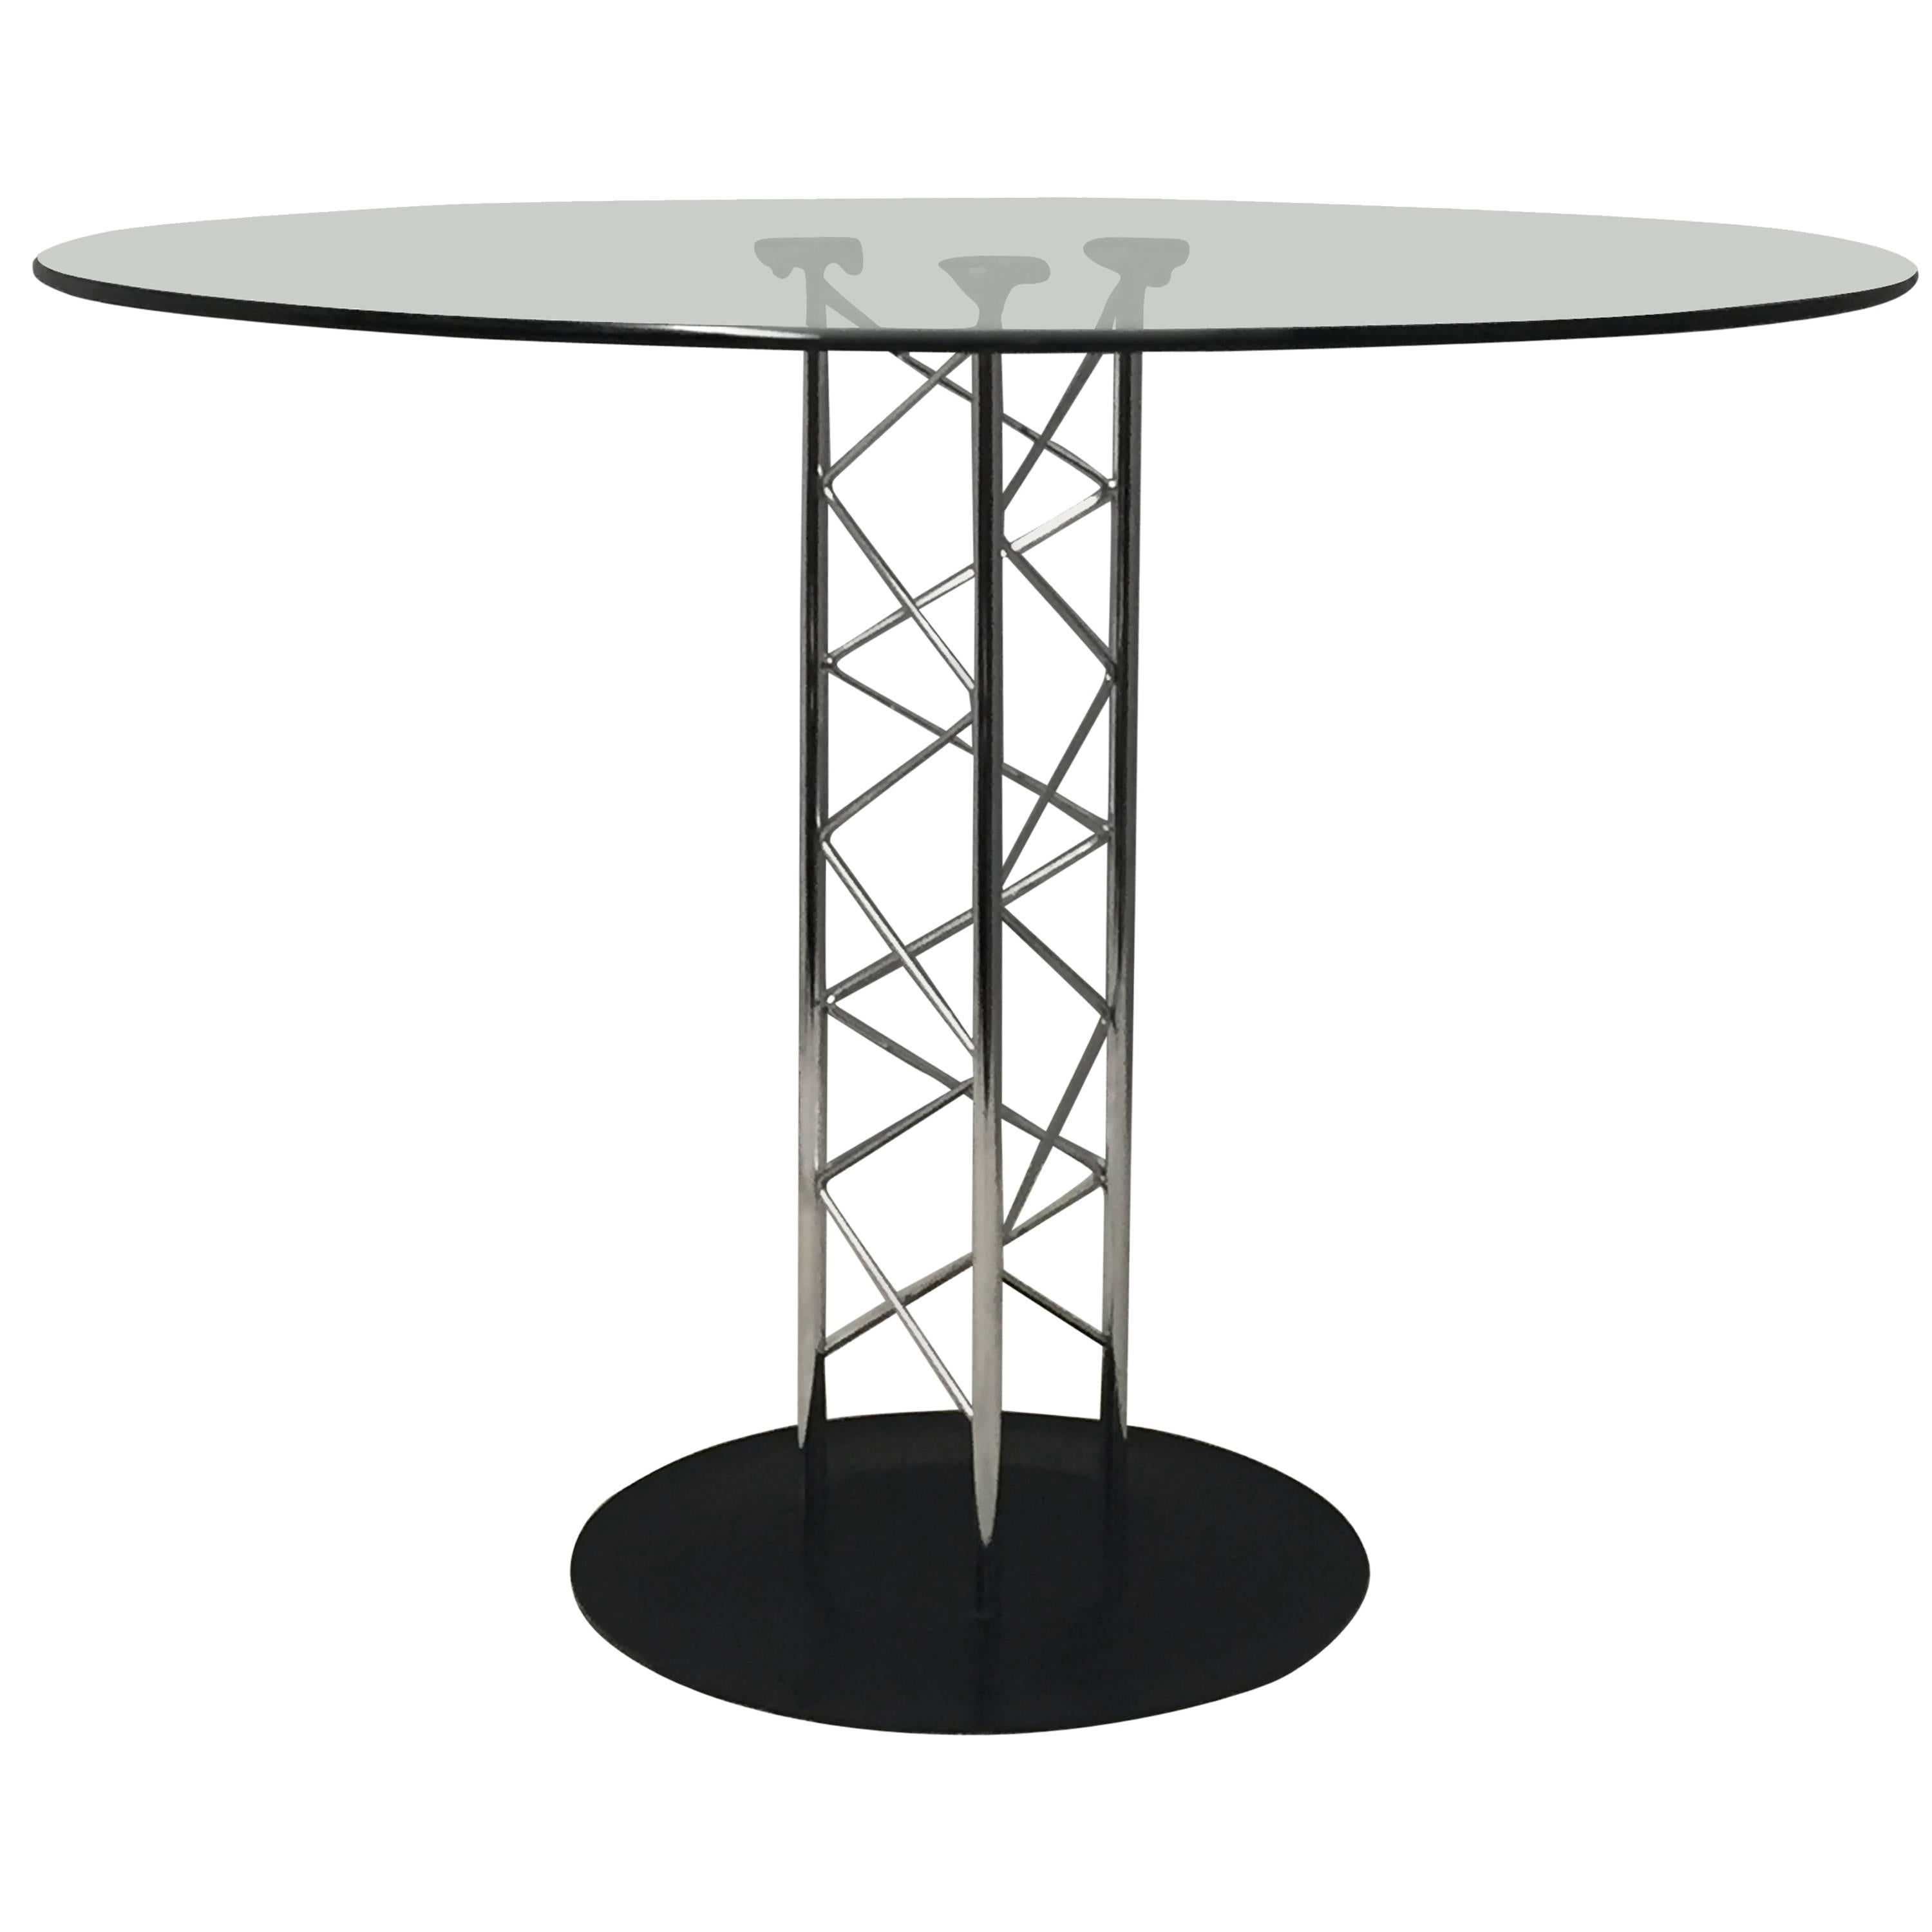 Sleek Italian Mid-Century Modern Glass and Chrome Round Table